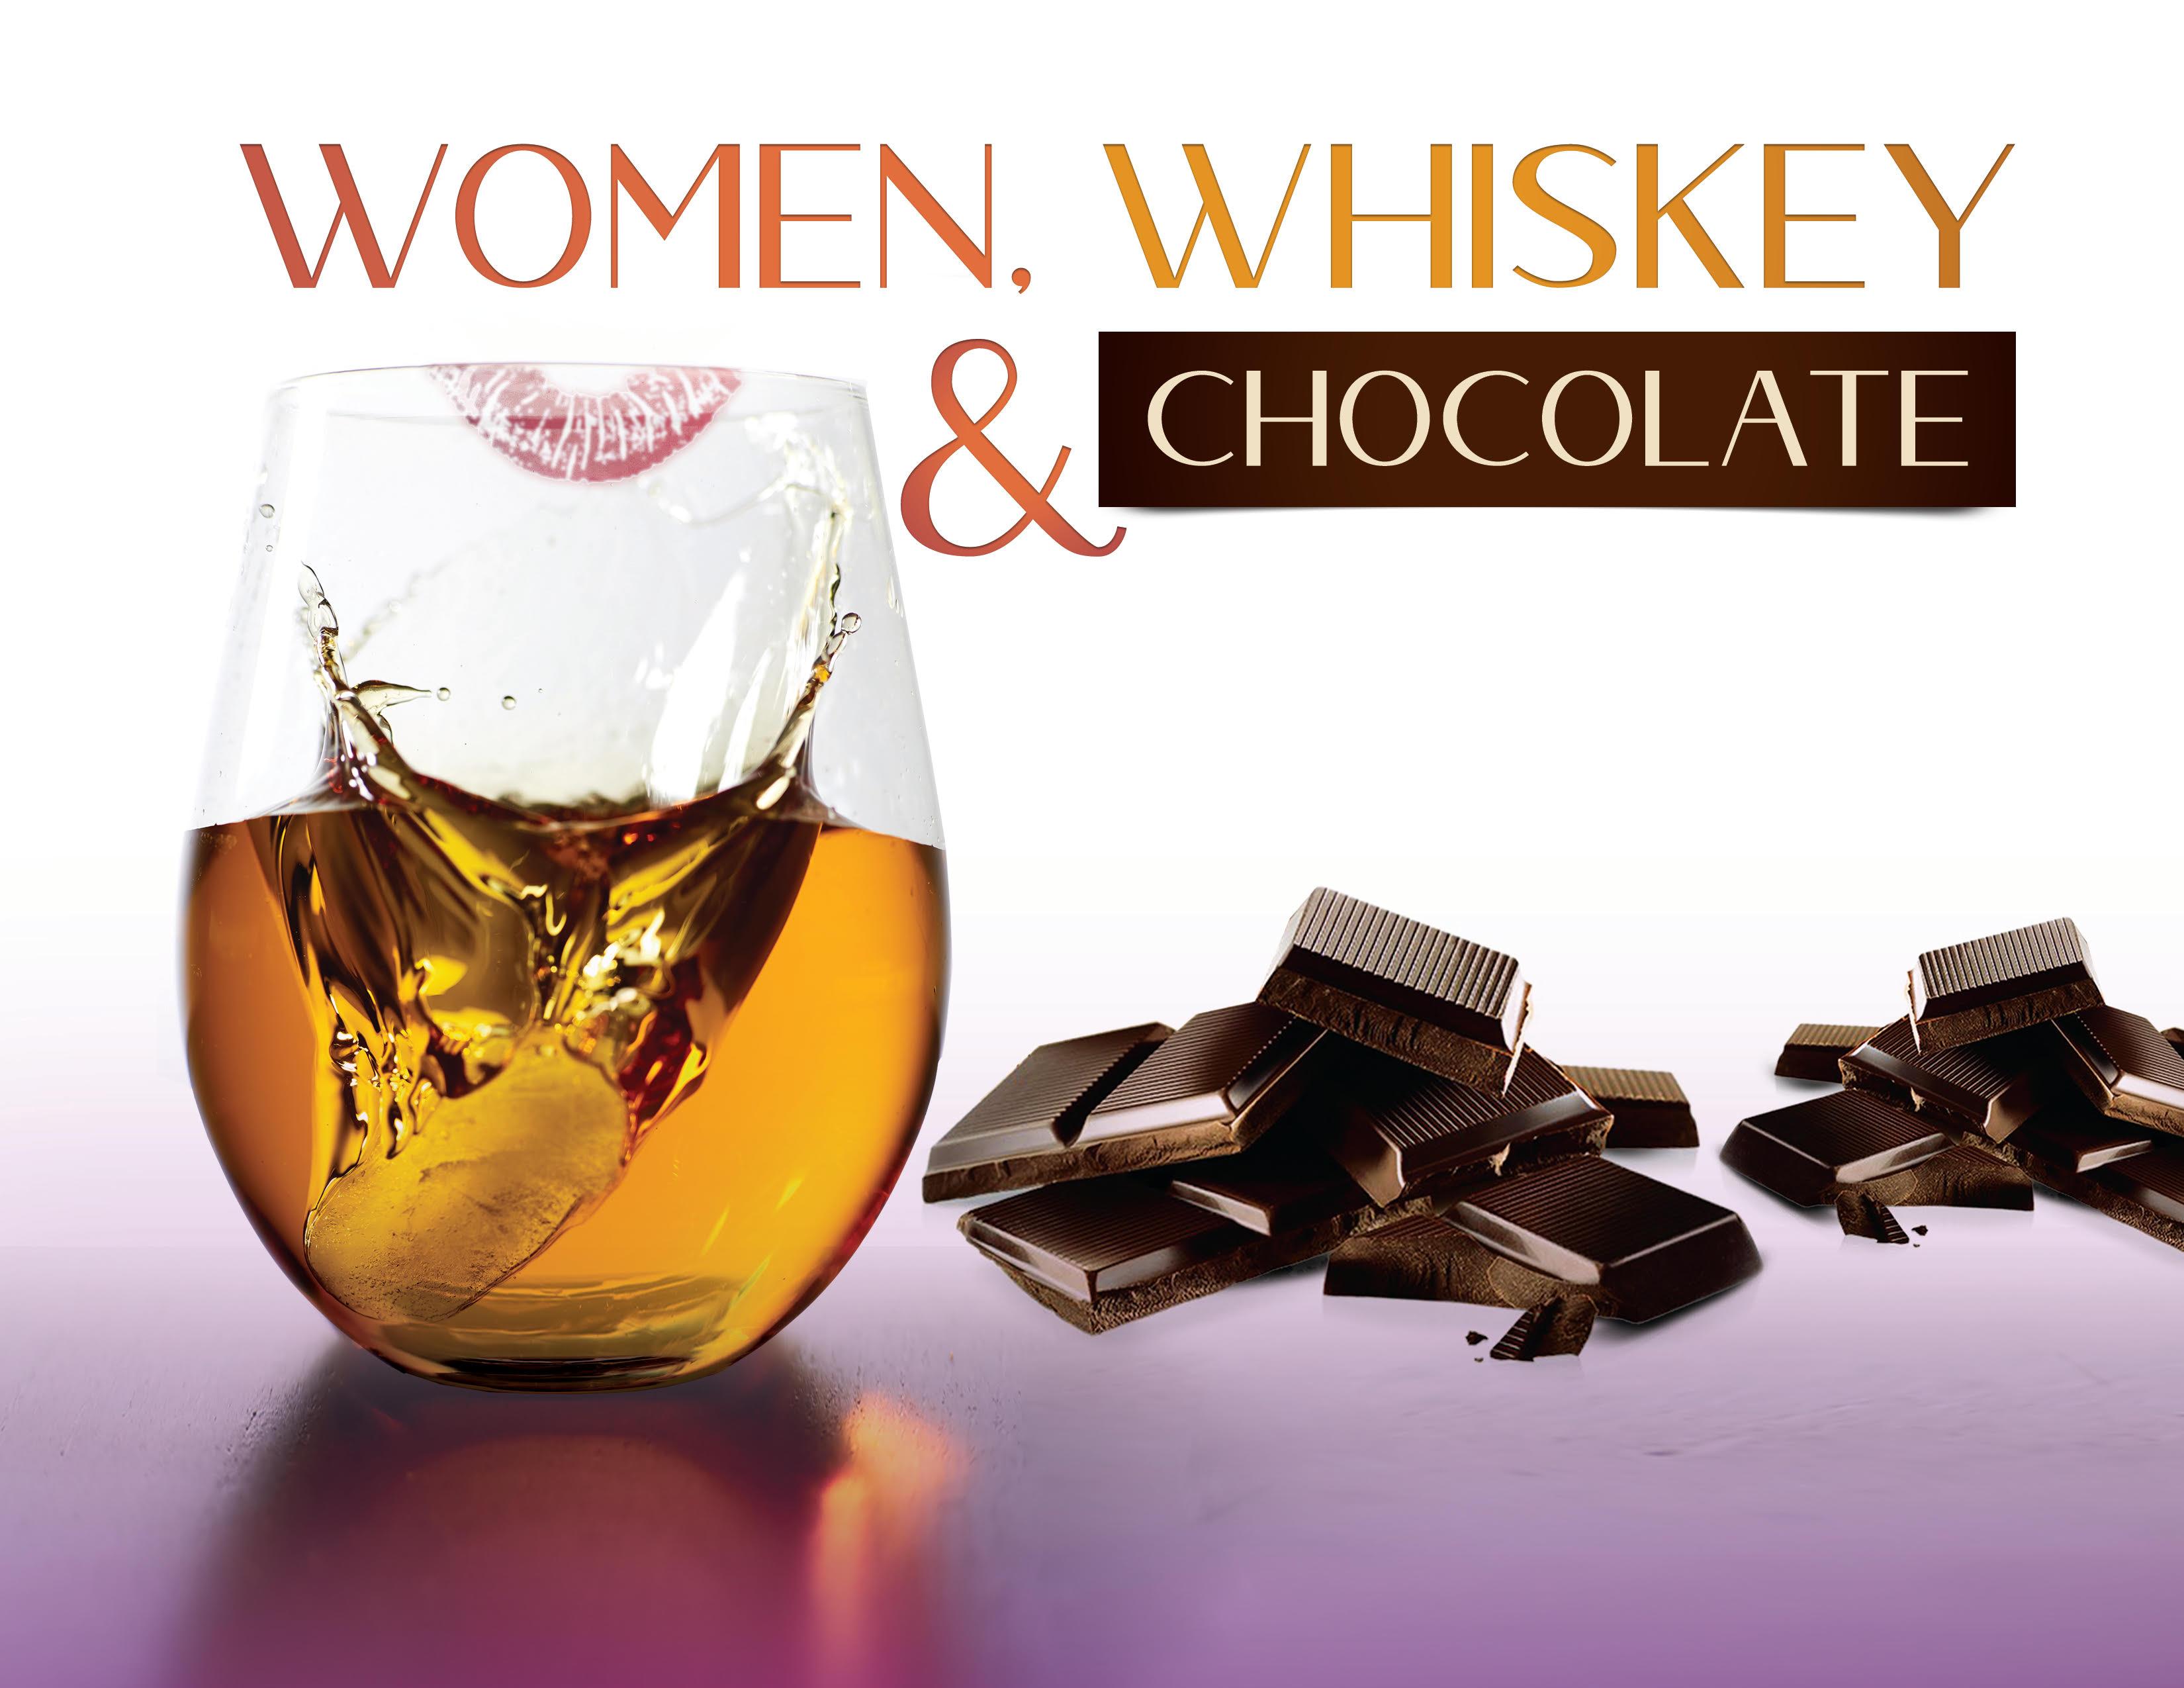 Women, Whiskey and Chocolate